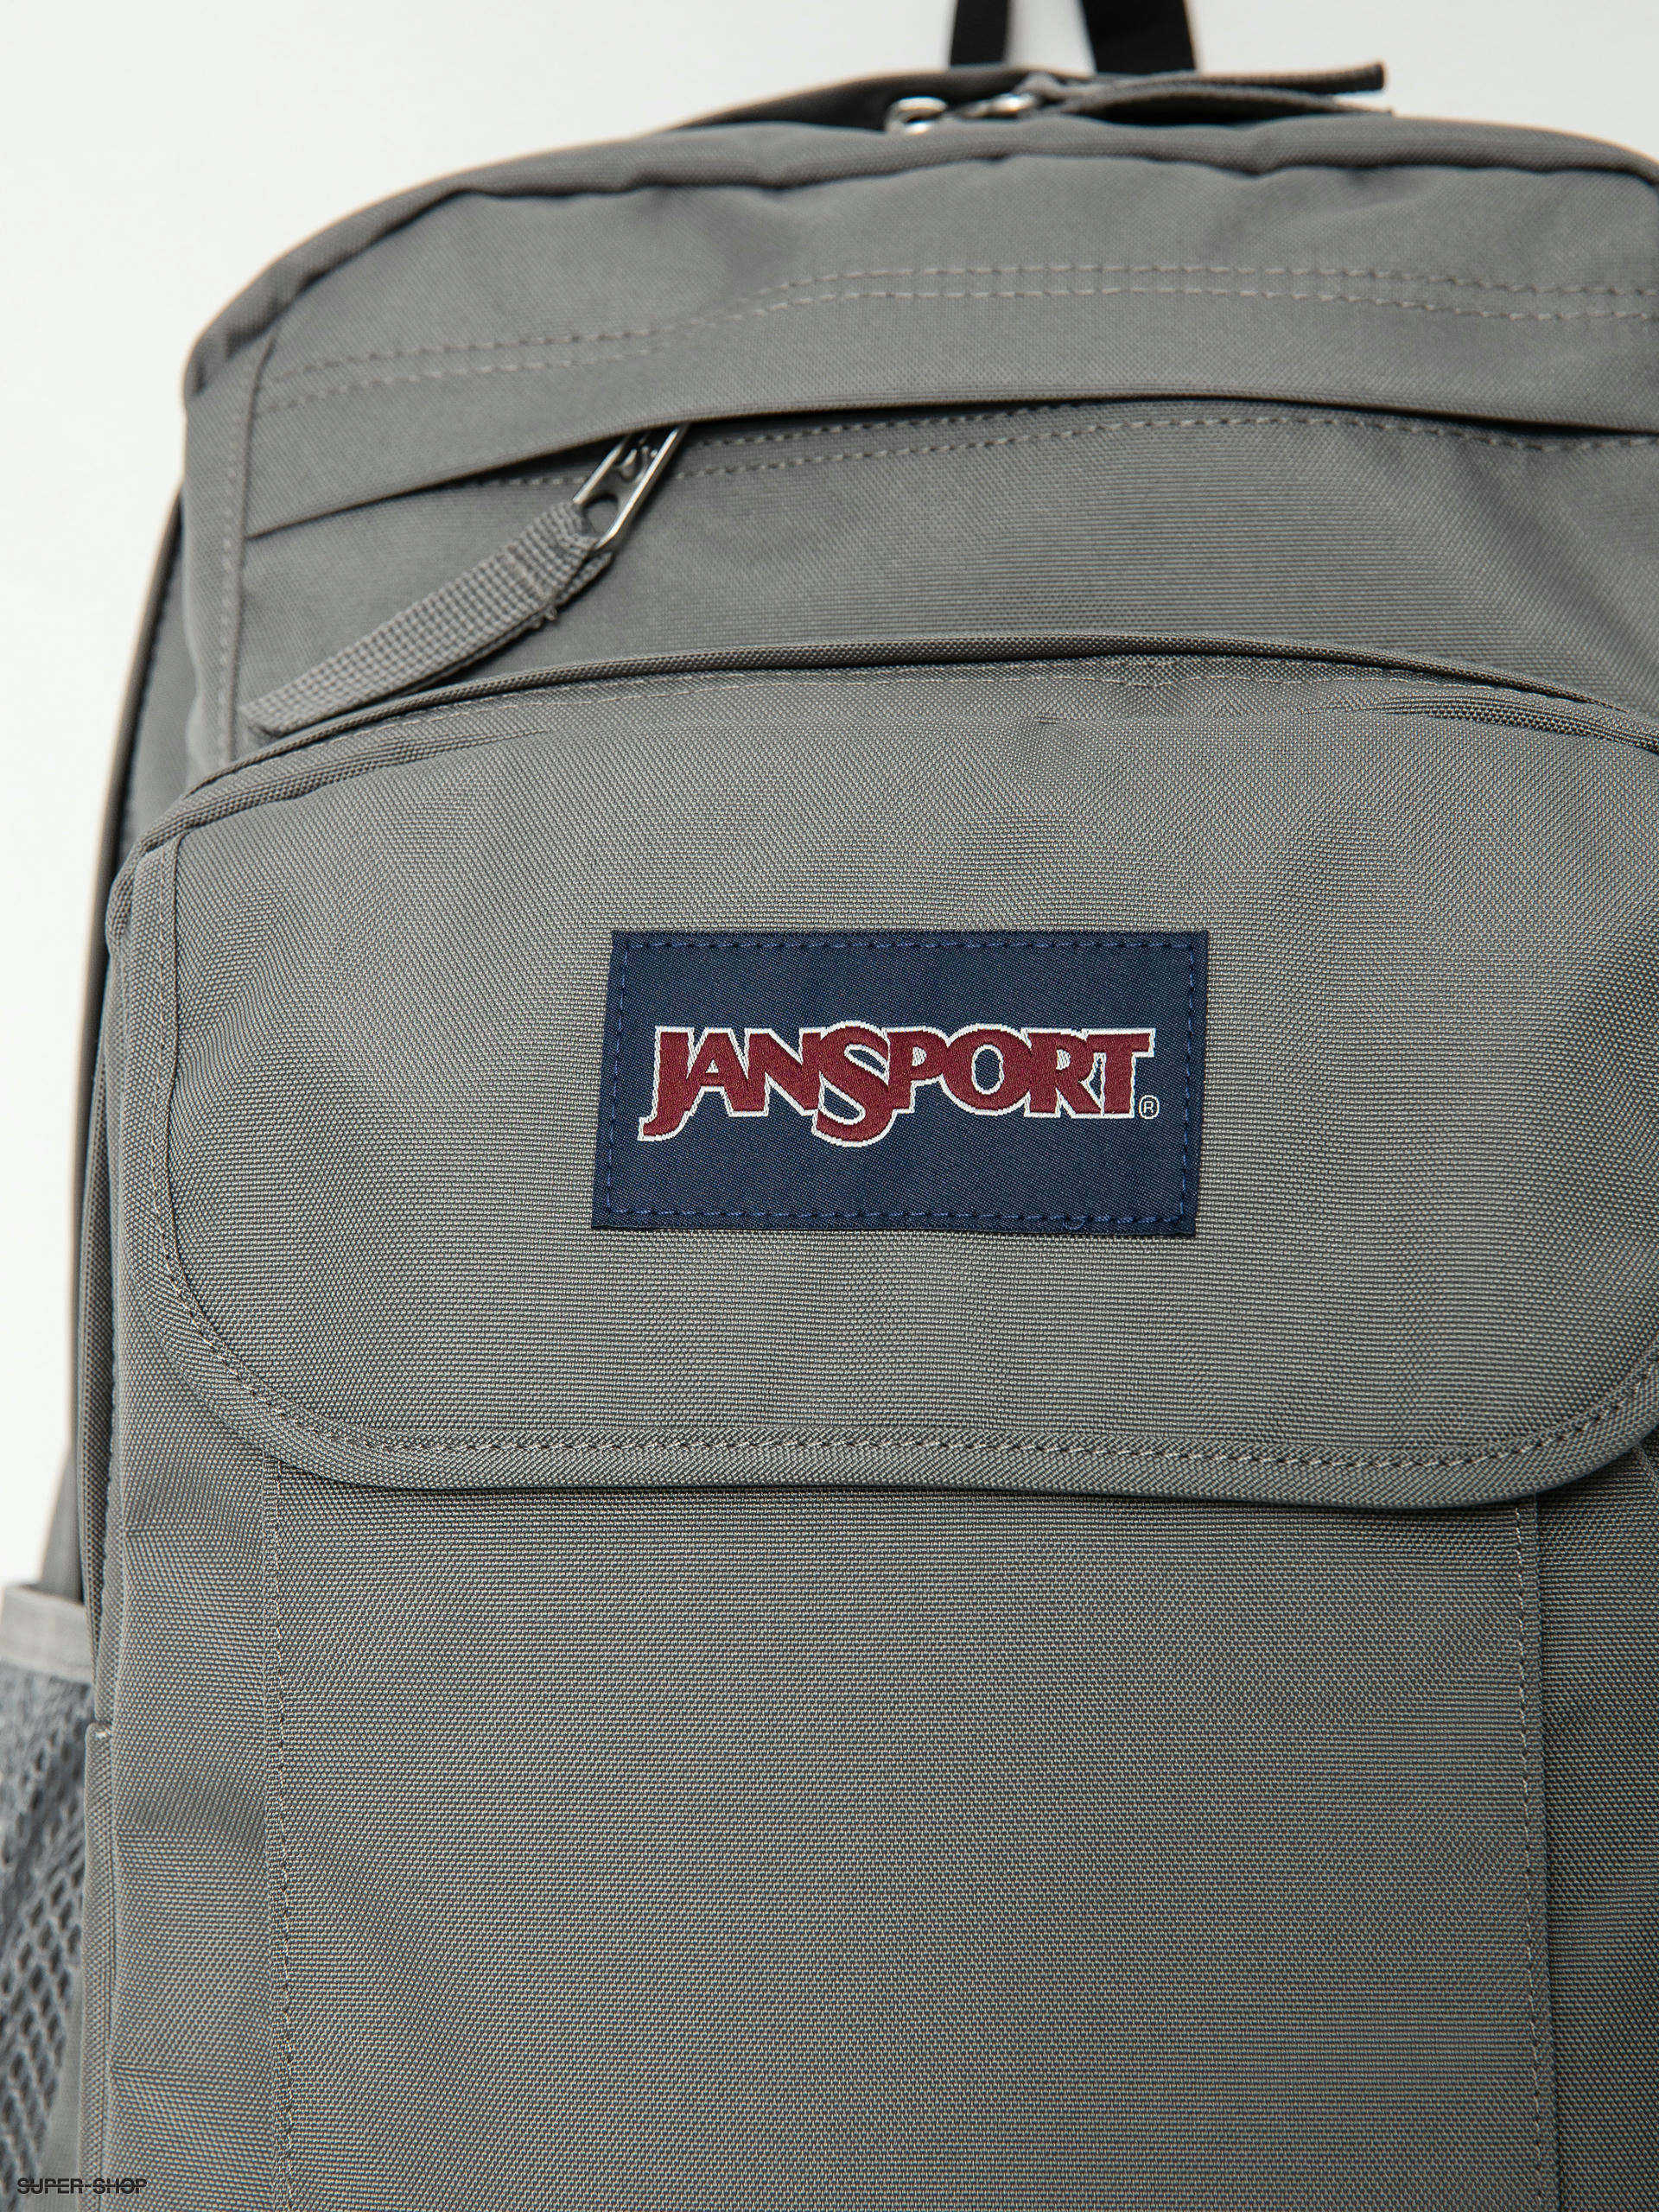 Right Pack - Graphite Grey  JanSport Europe – JanSport Europe EU